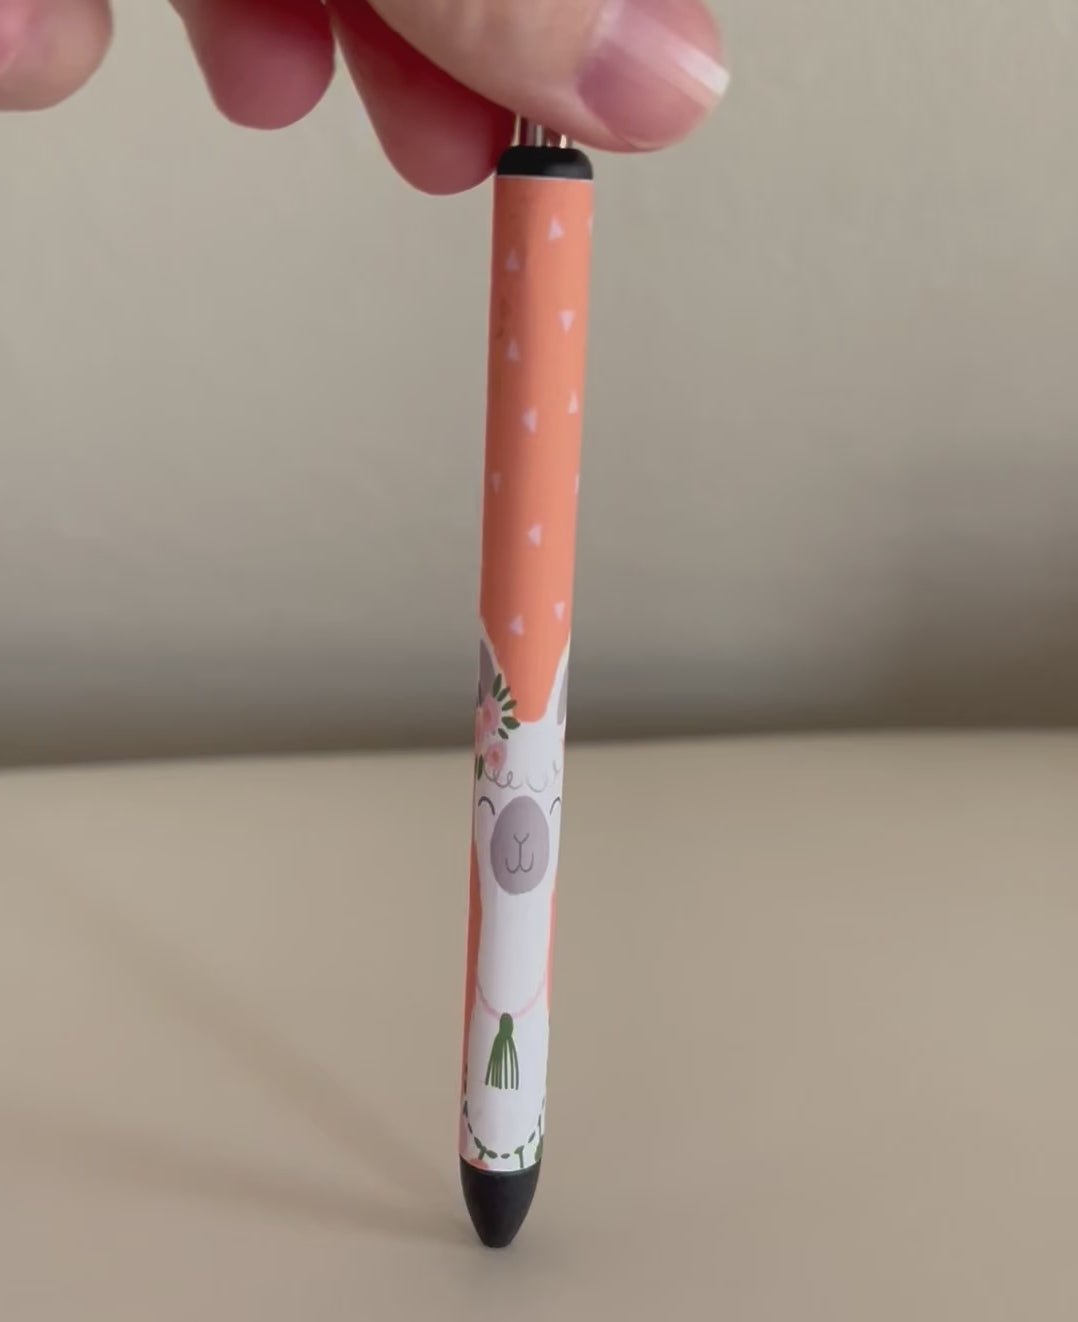 Video of llama pen to show full design. 